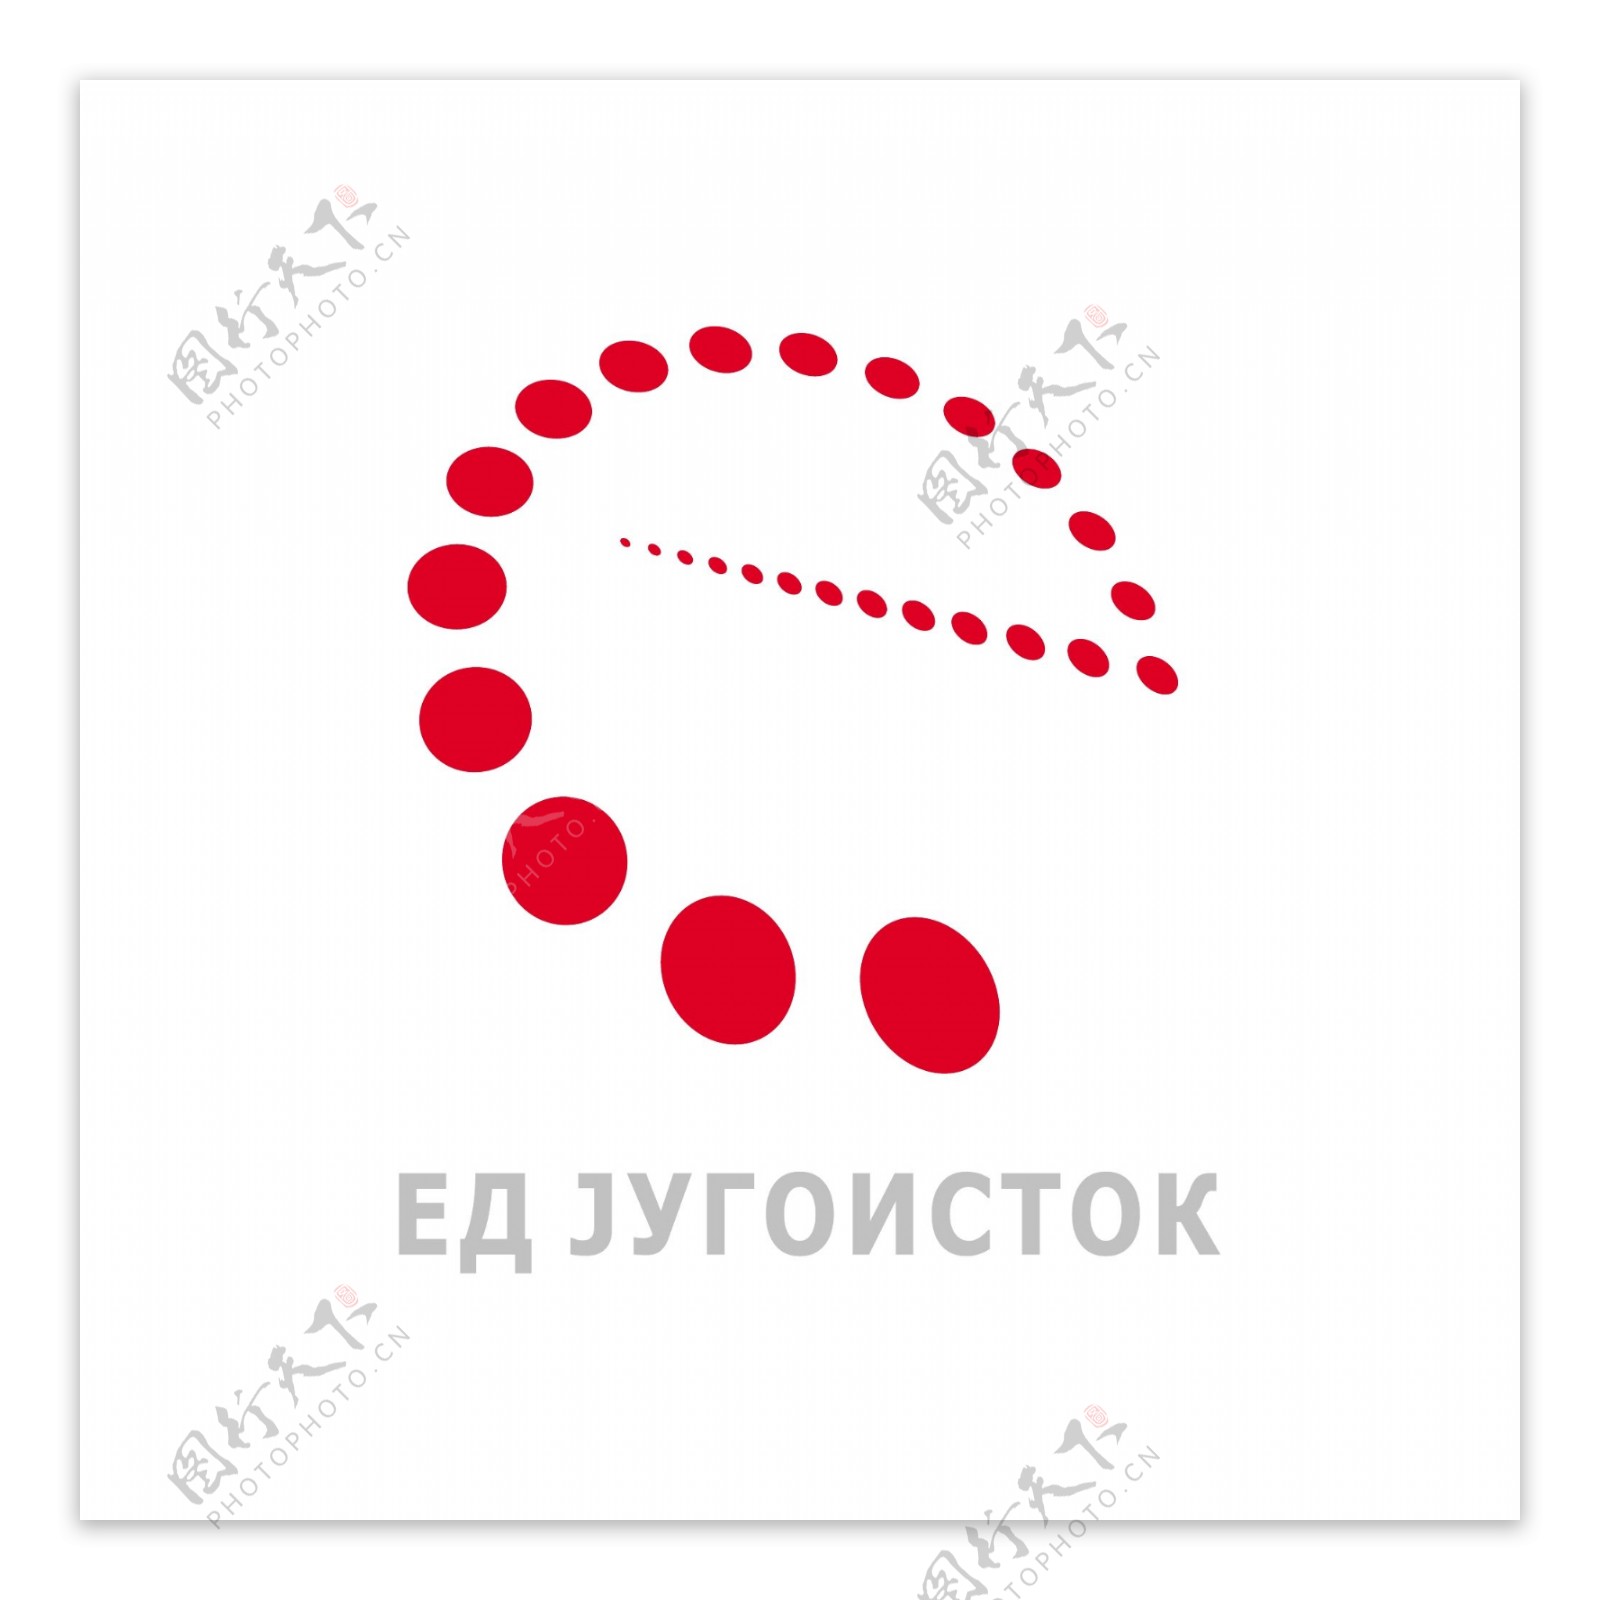 JUGOISTOKlogo设计欣赏JUGOISTOK服务公司标志下载标志设计欣赏